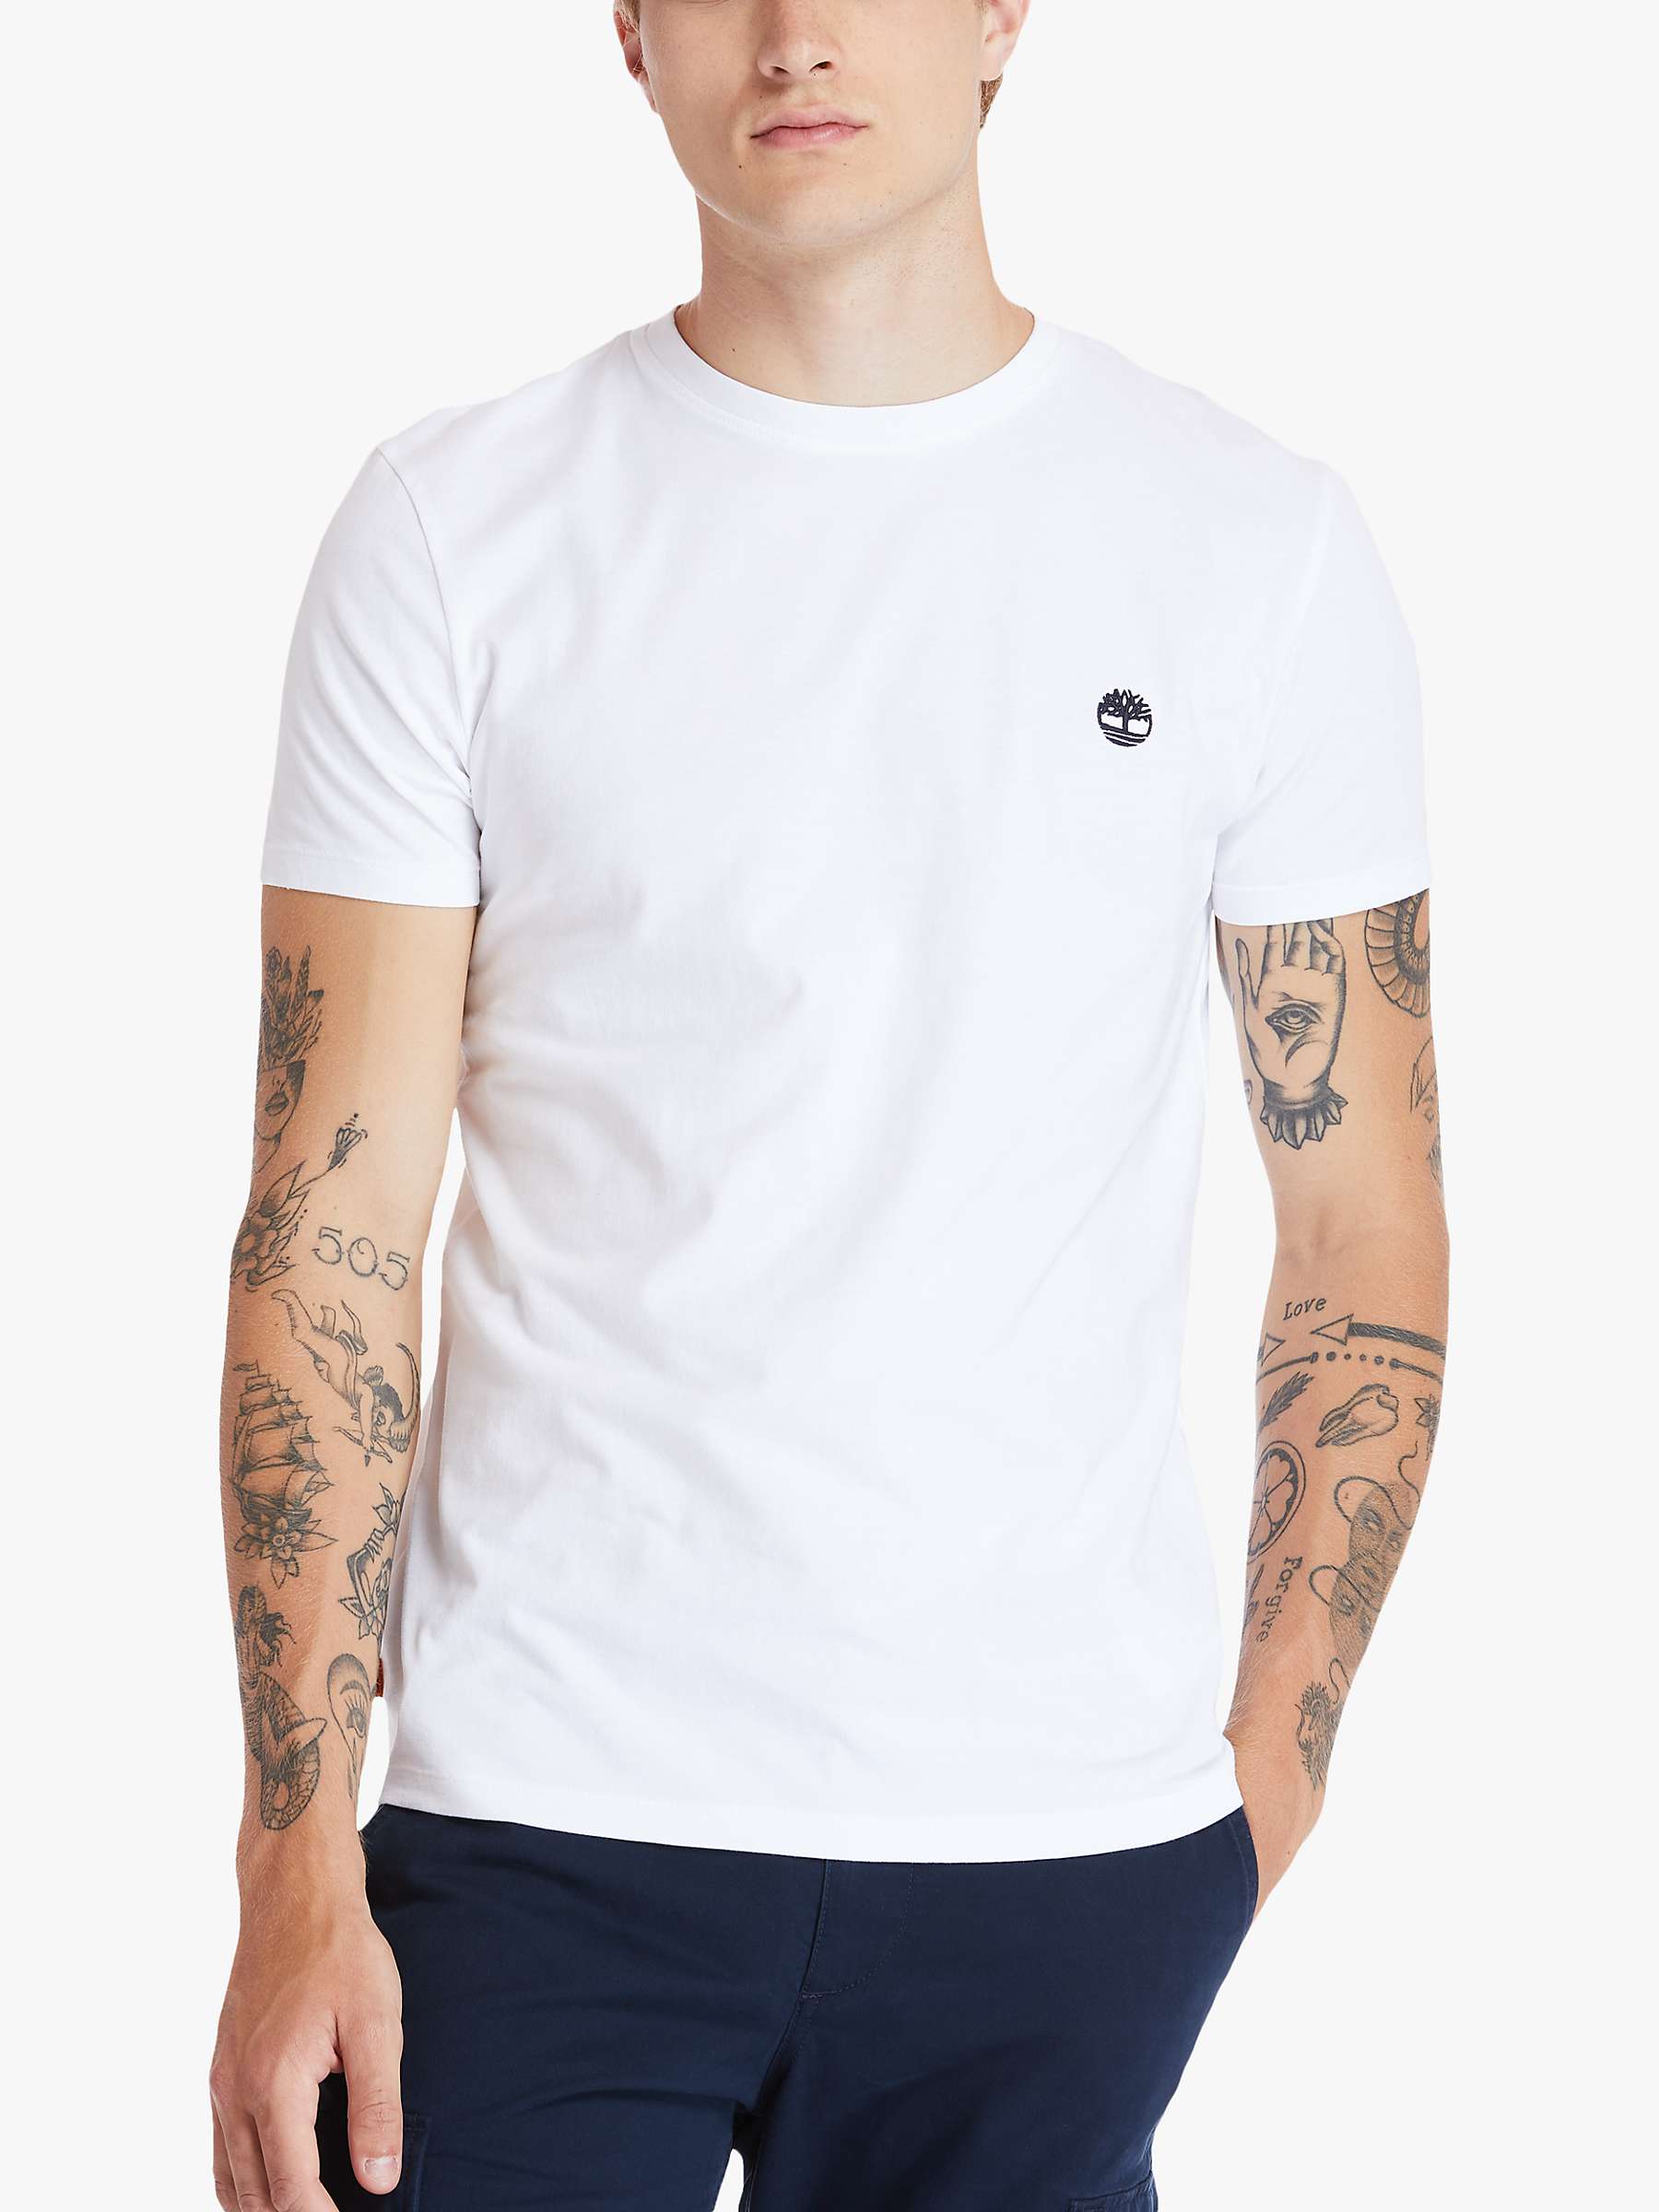 Timberland Dunstan Short Sleeve Logo T-Shirt, White at John Lewis & Partners